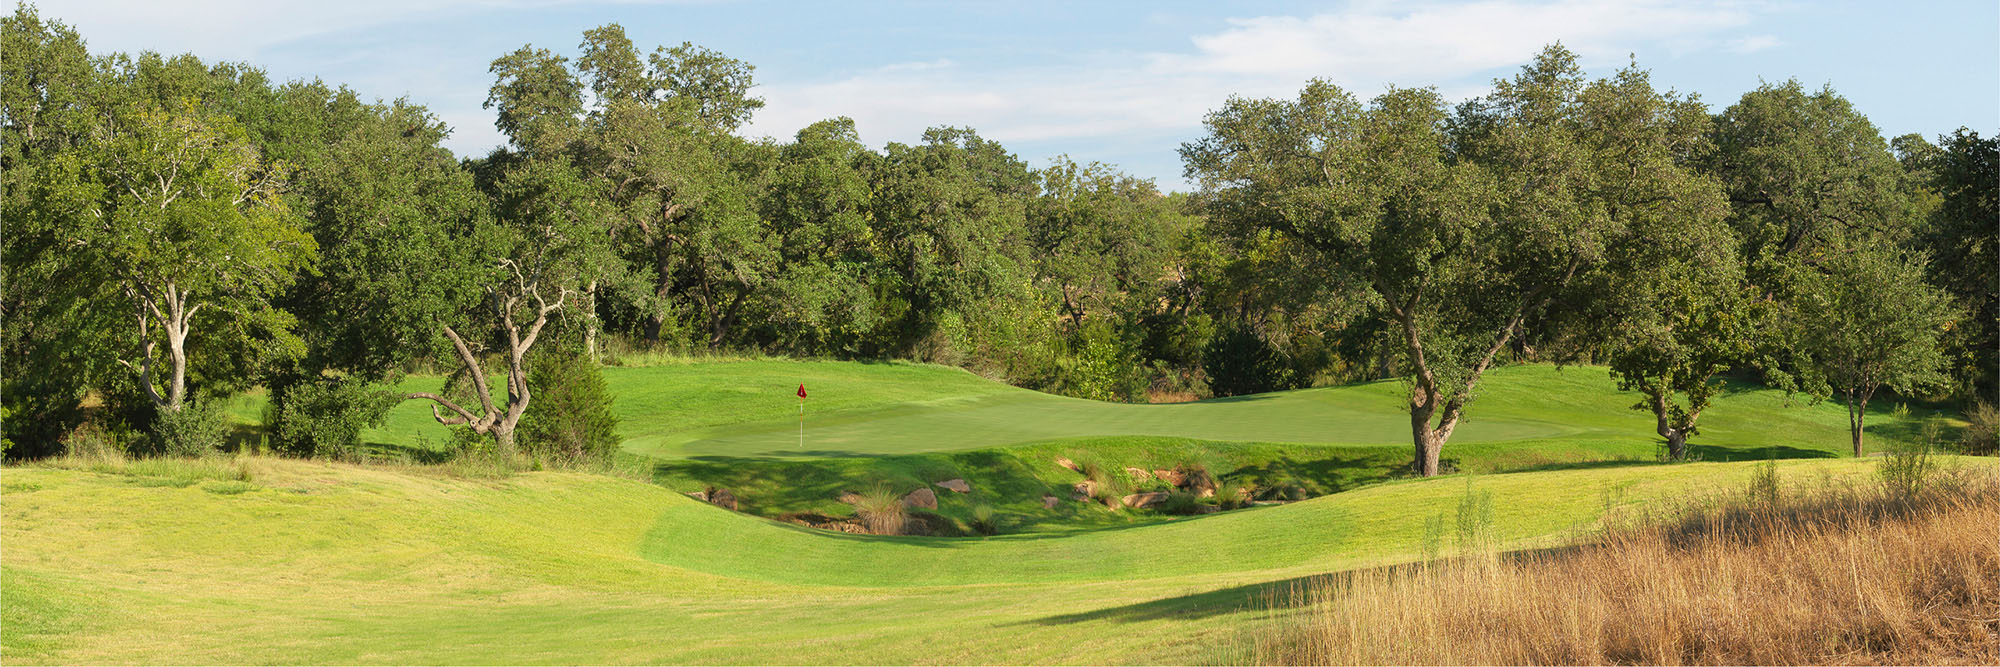 Golf Course Image - Escondido No. 17